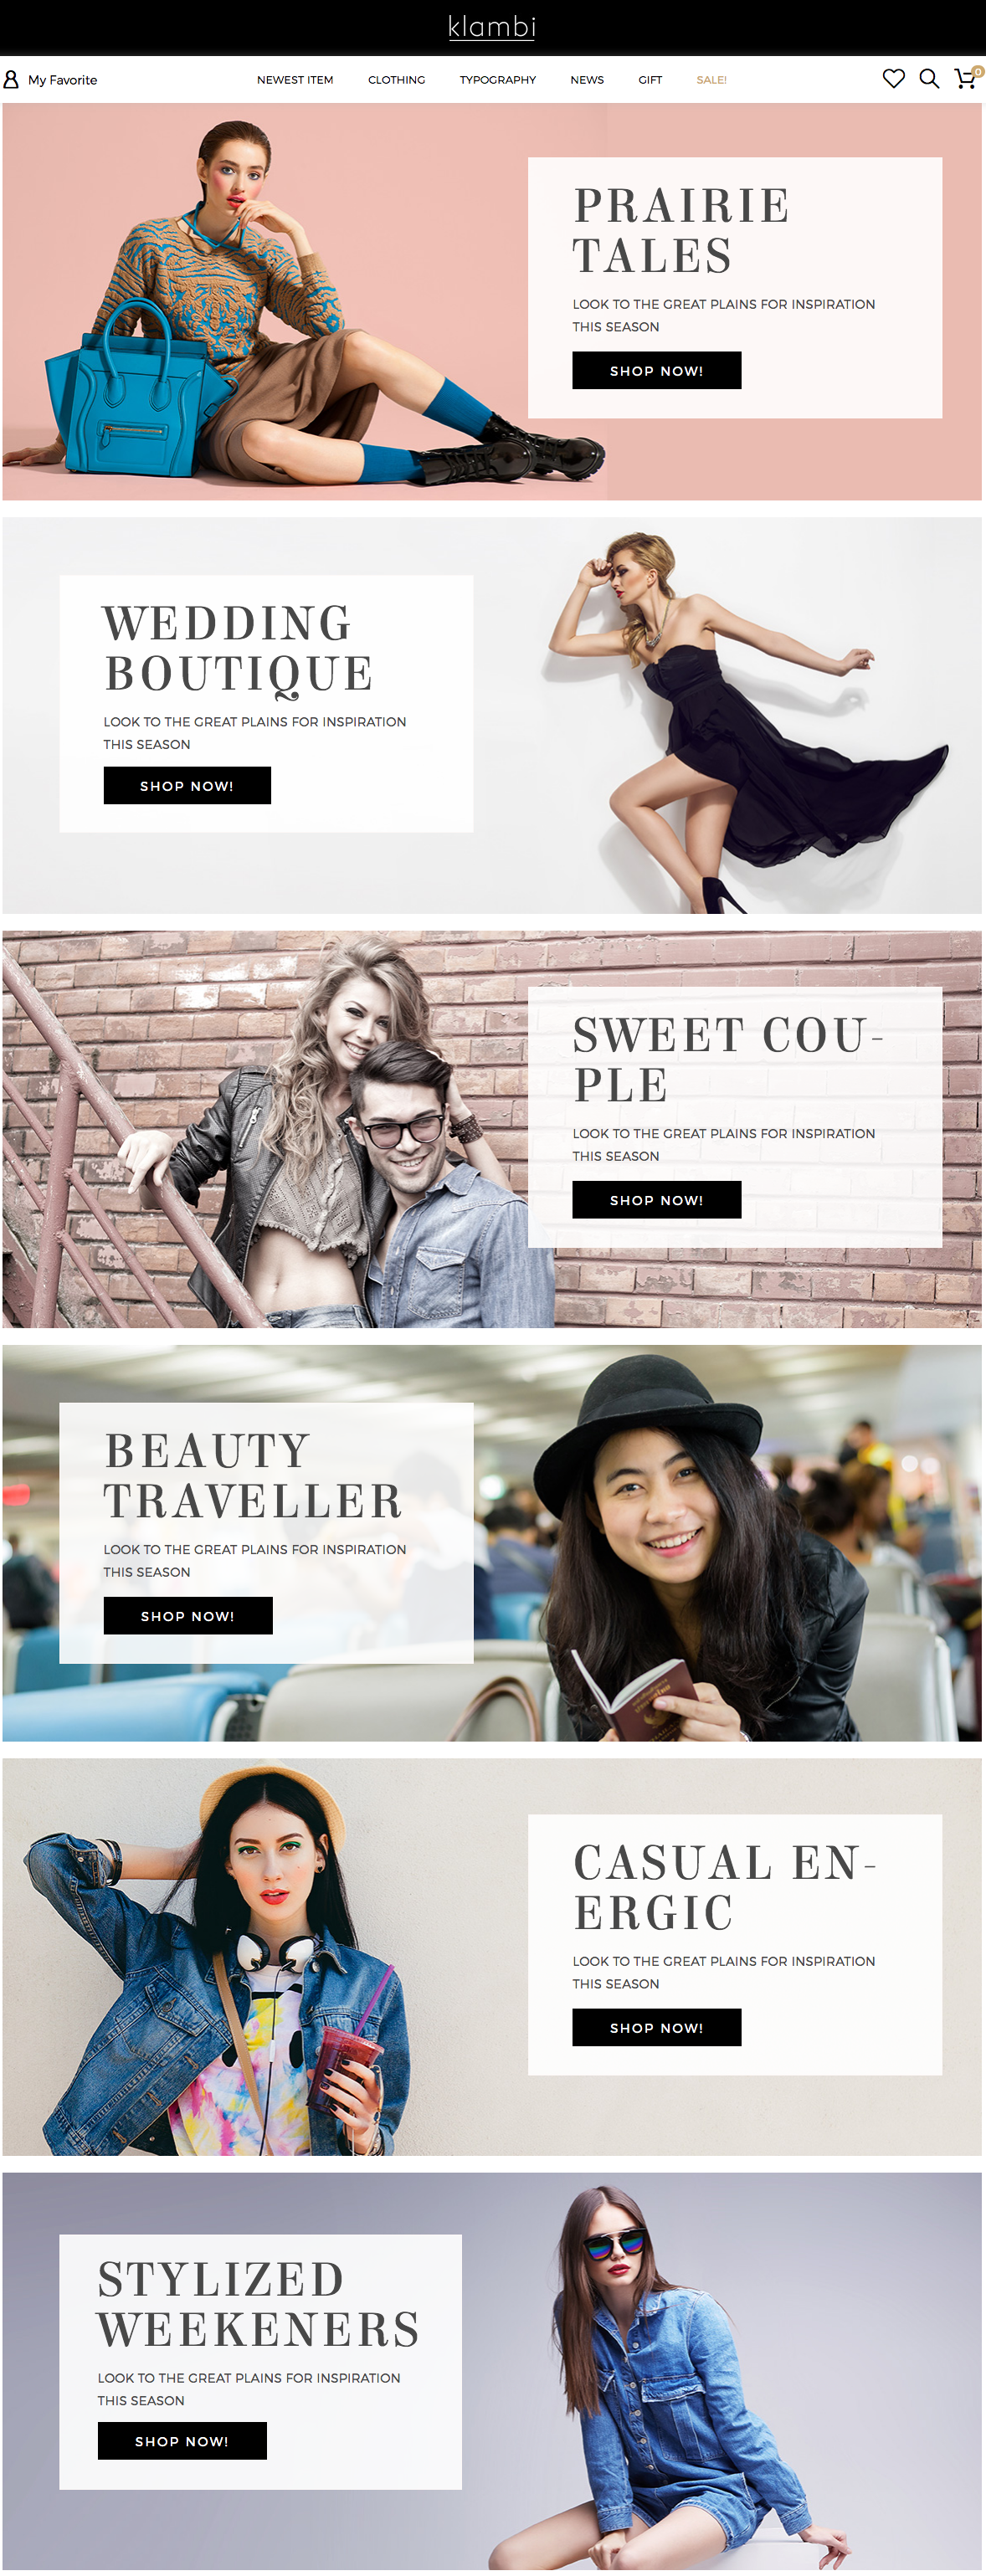 Klambi - Modern E-Commerce Fashion Store WordPress theme